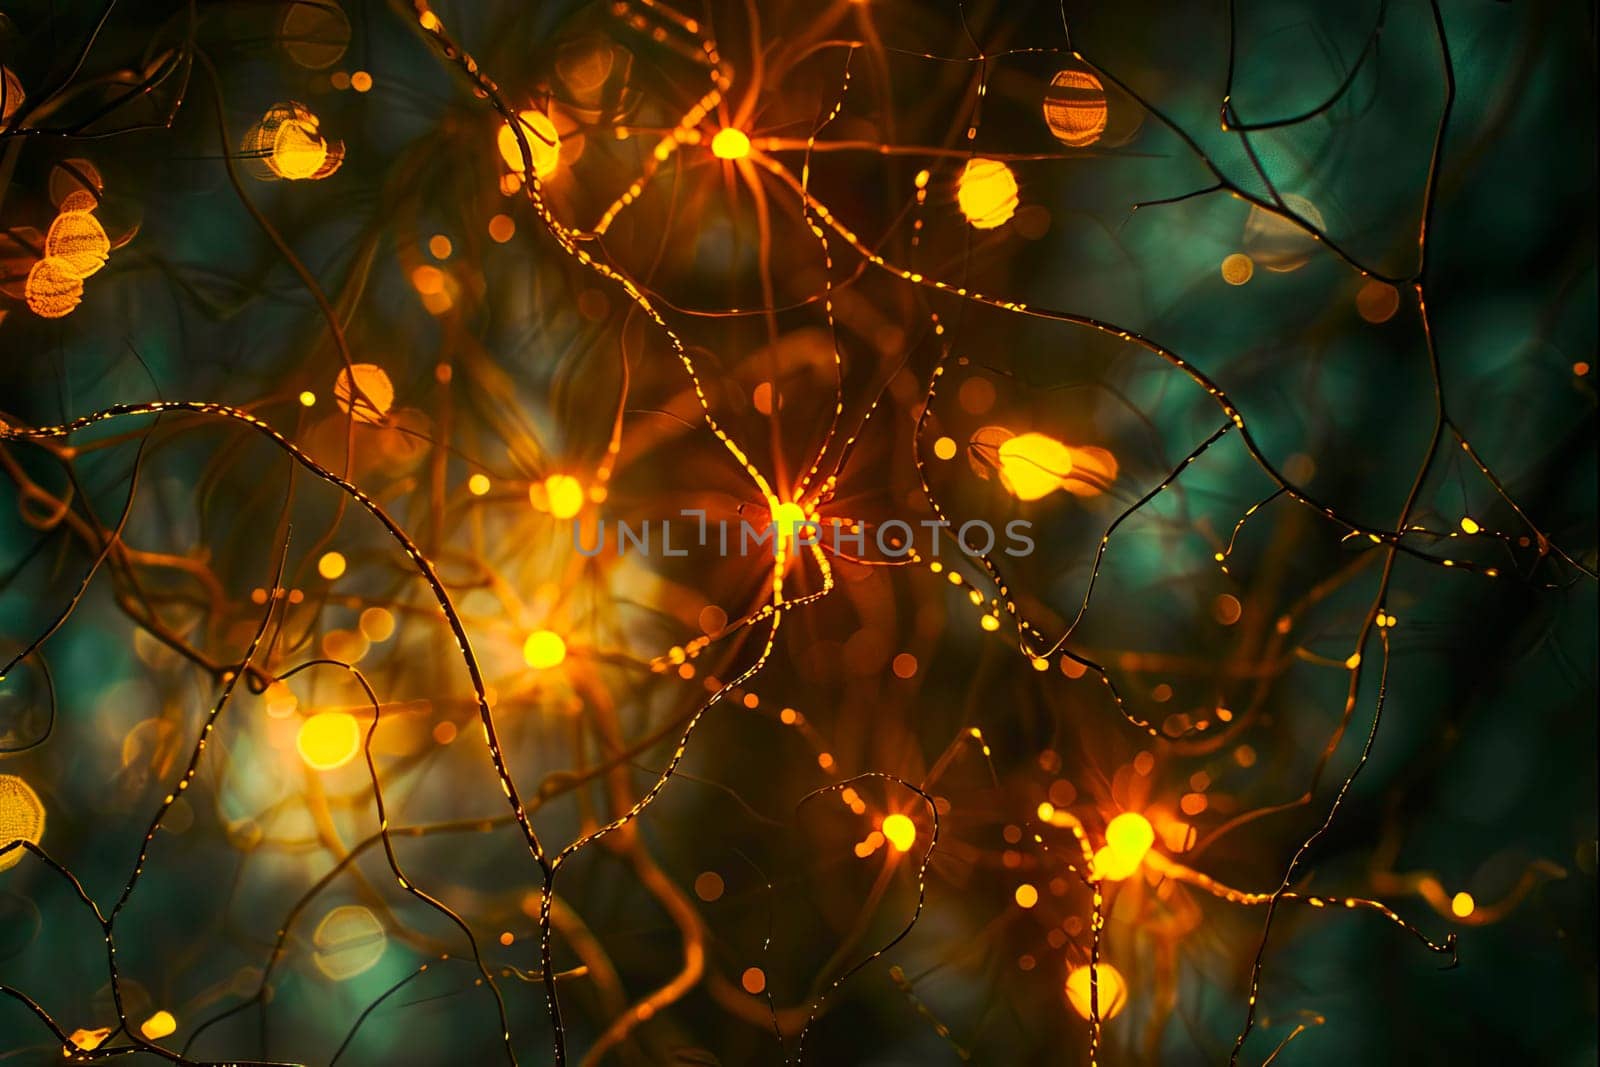 Neurons firing, showcasing the complexity of human brain activity by vladimka